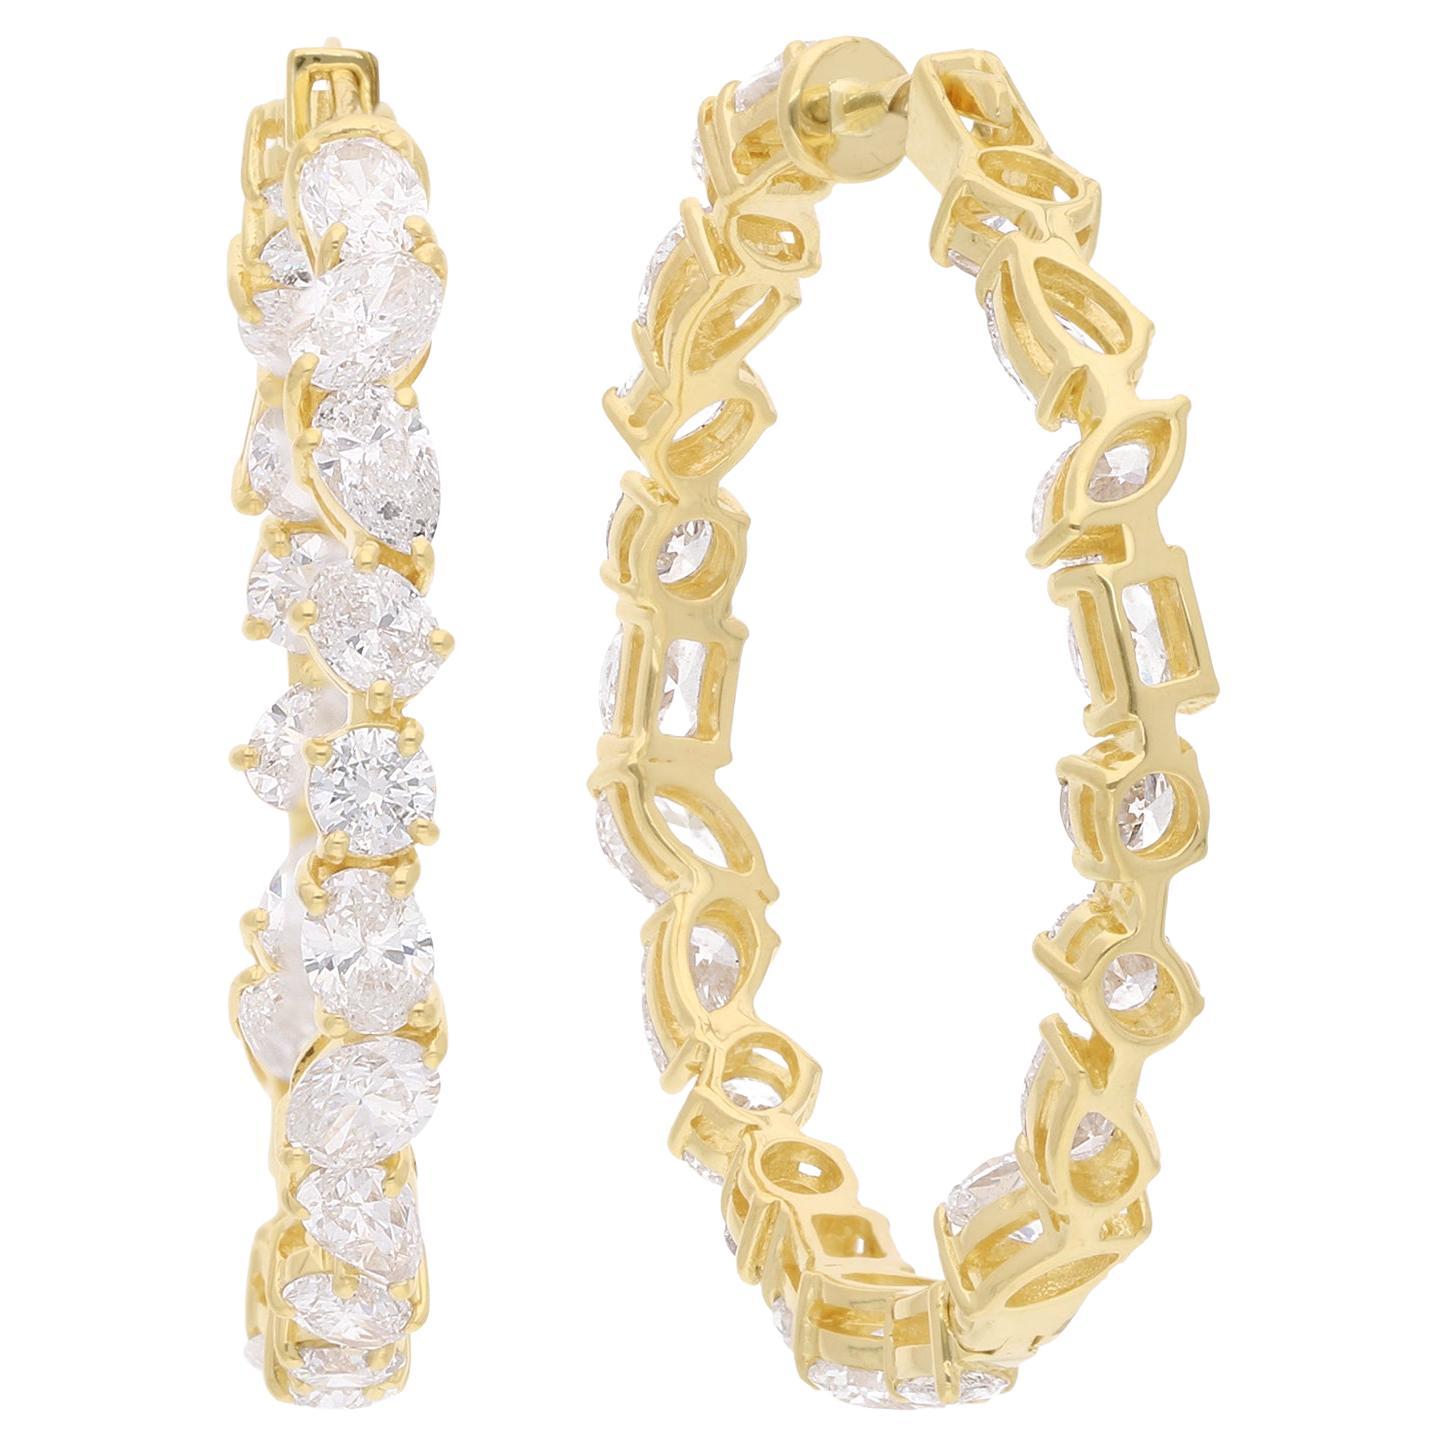 7.4 Carat SI Clarity HI Color Diamond Hoop Earrings 18 Karat Yellow Gold Jewelry For Sale